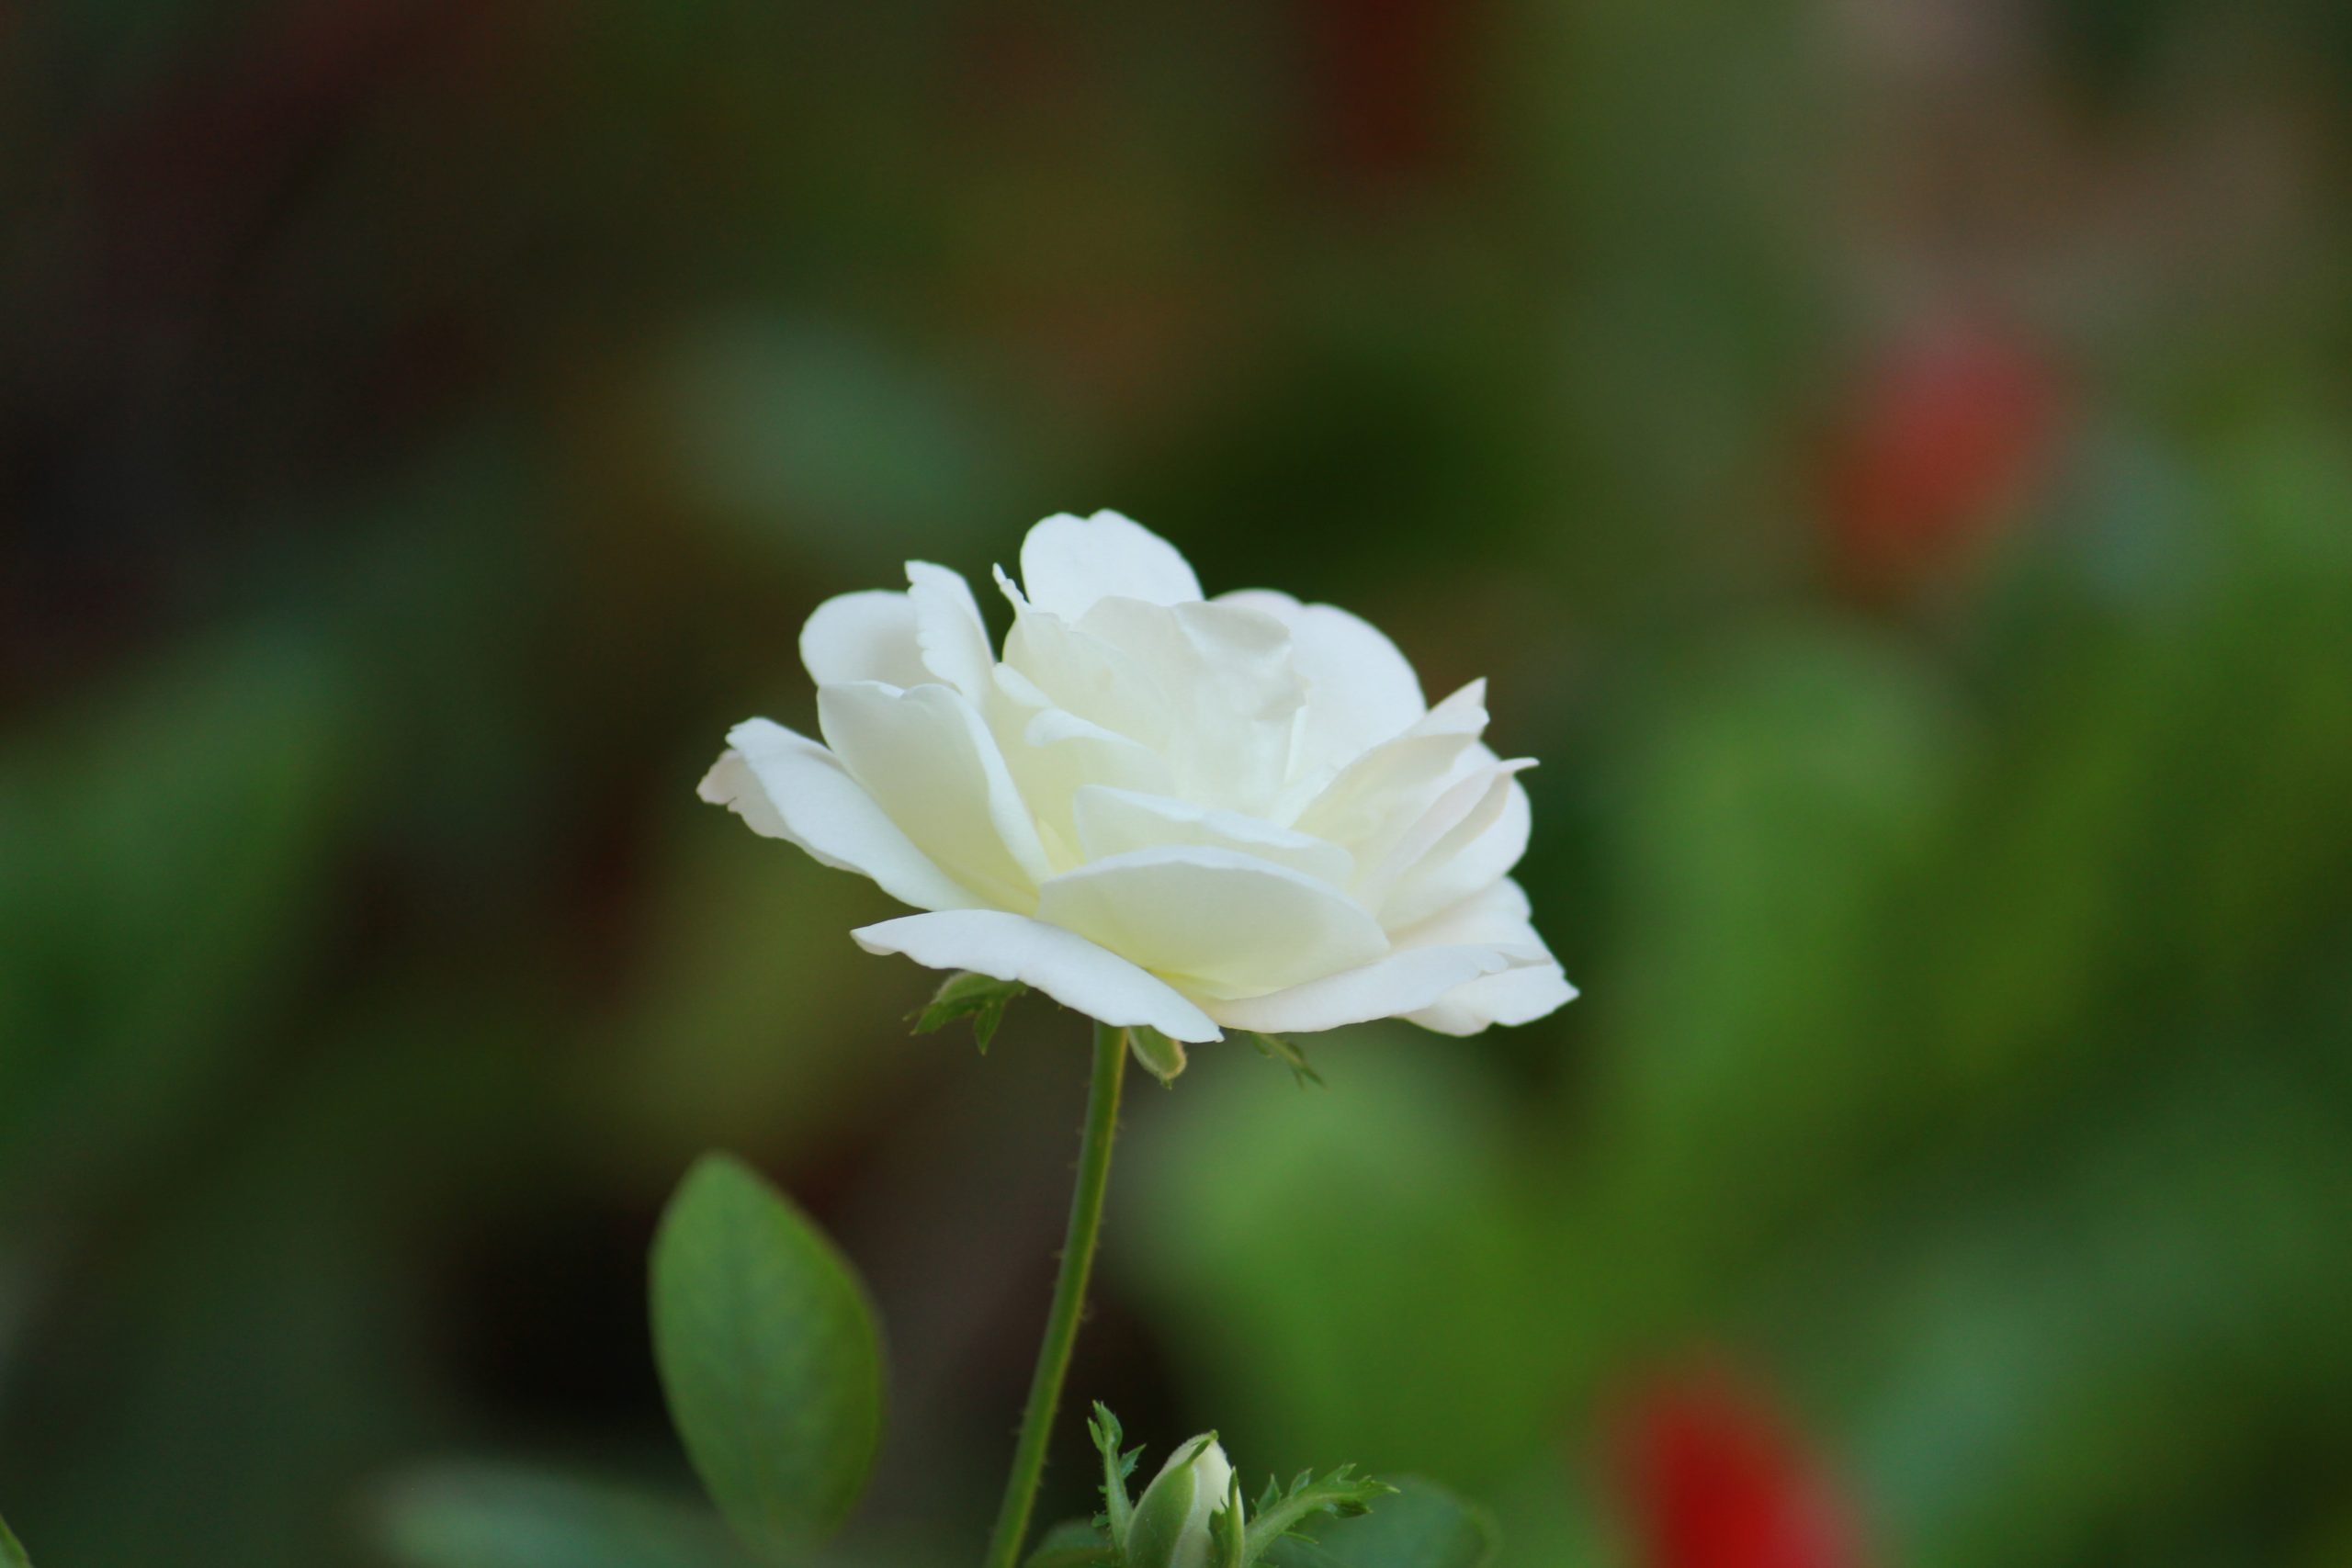 Glowing White Flower